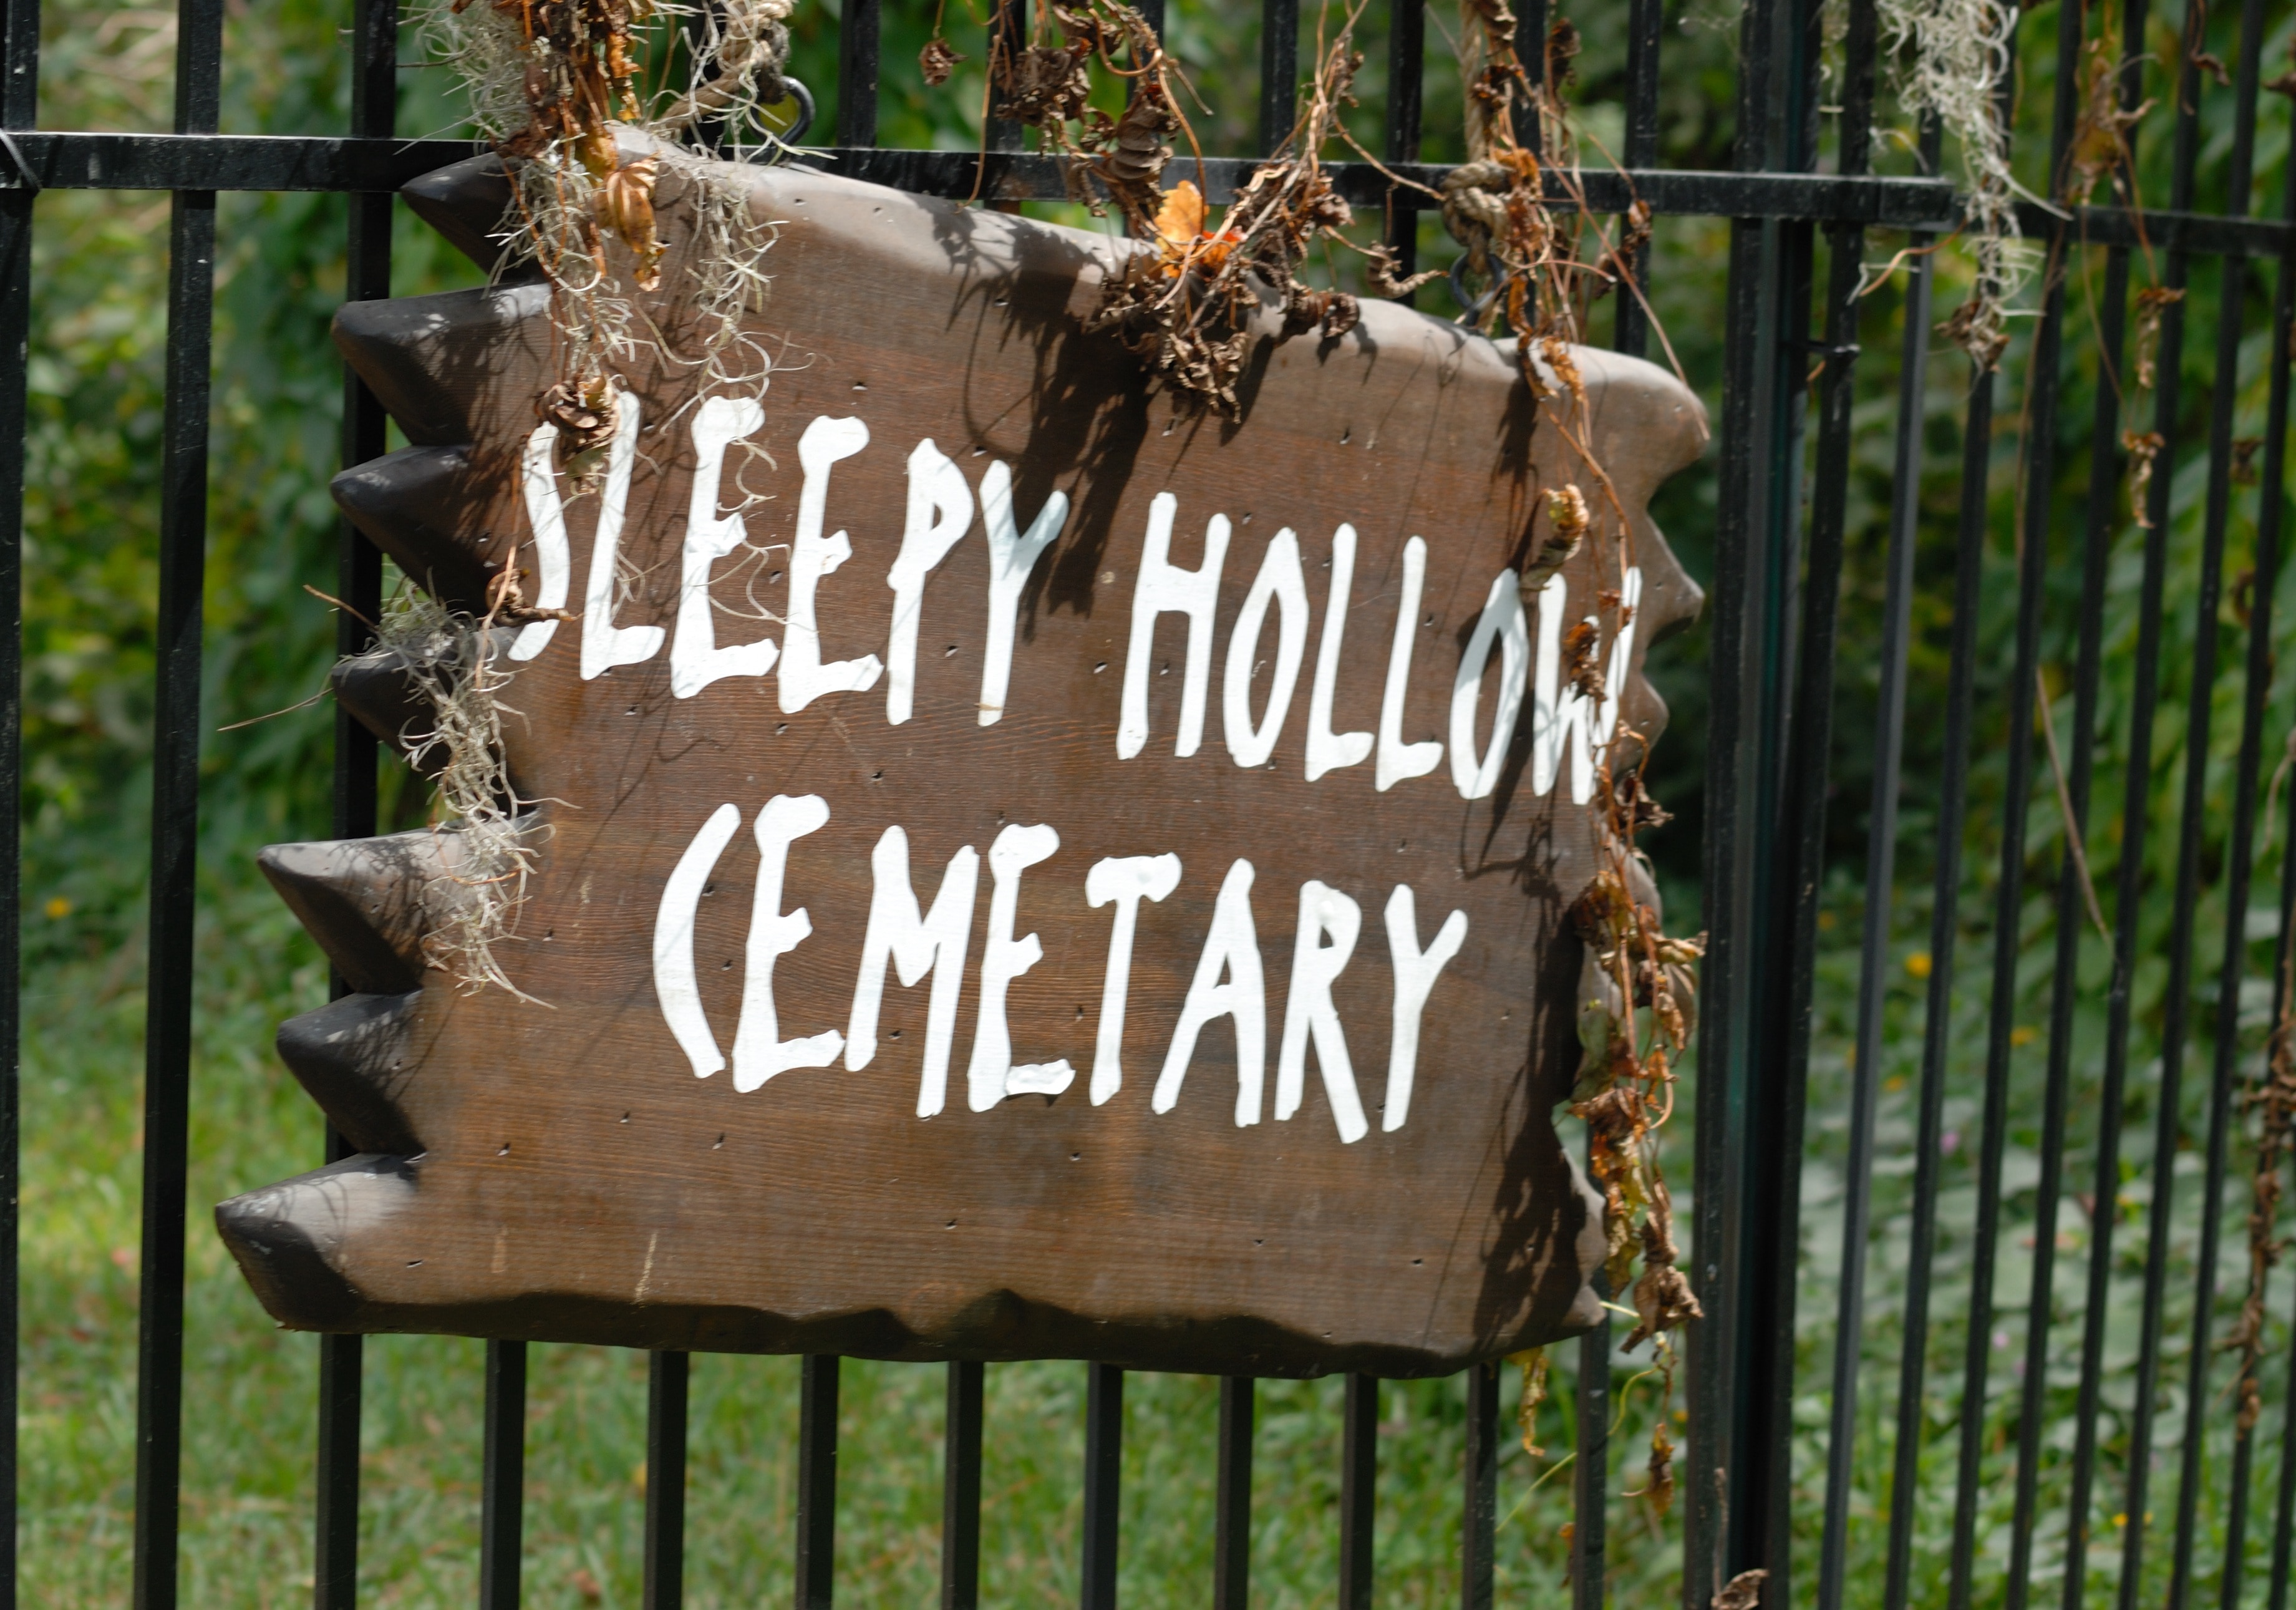 brown sleepy hollow cemetary signage